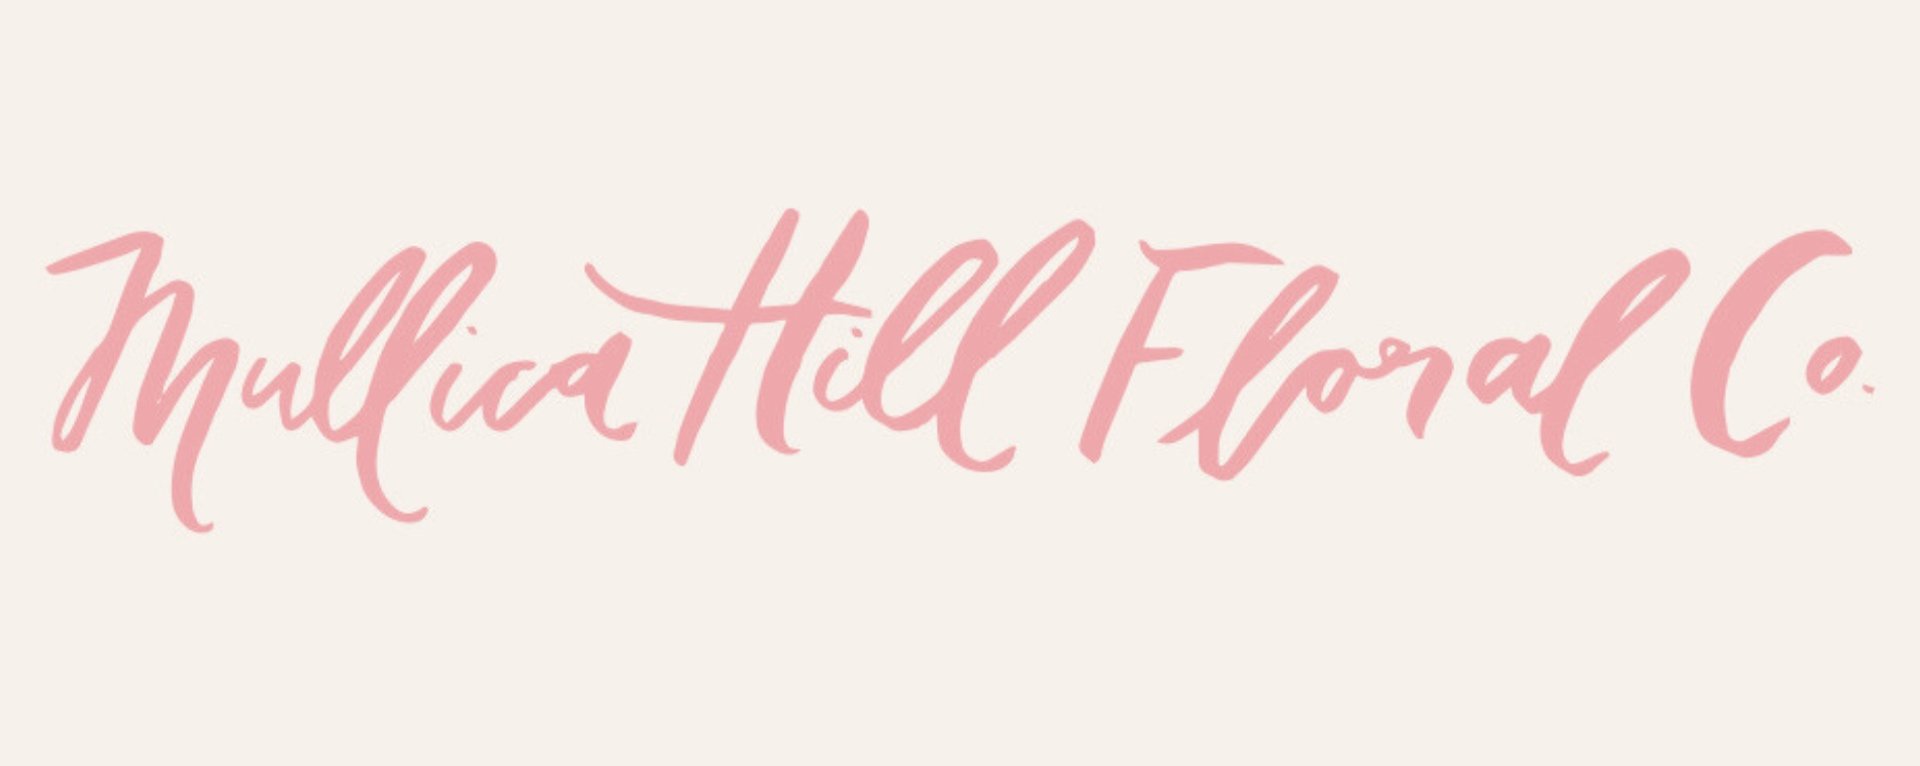 Mullica Hill Floral Co.